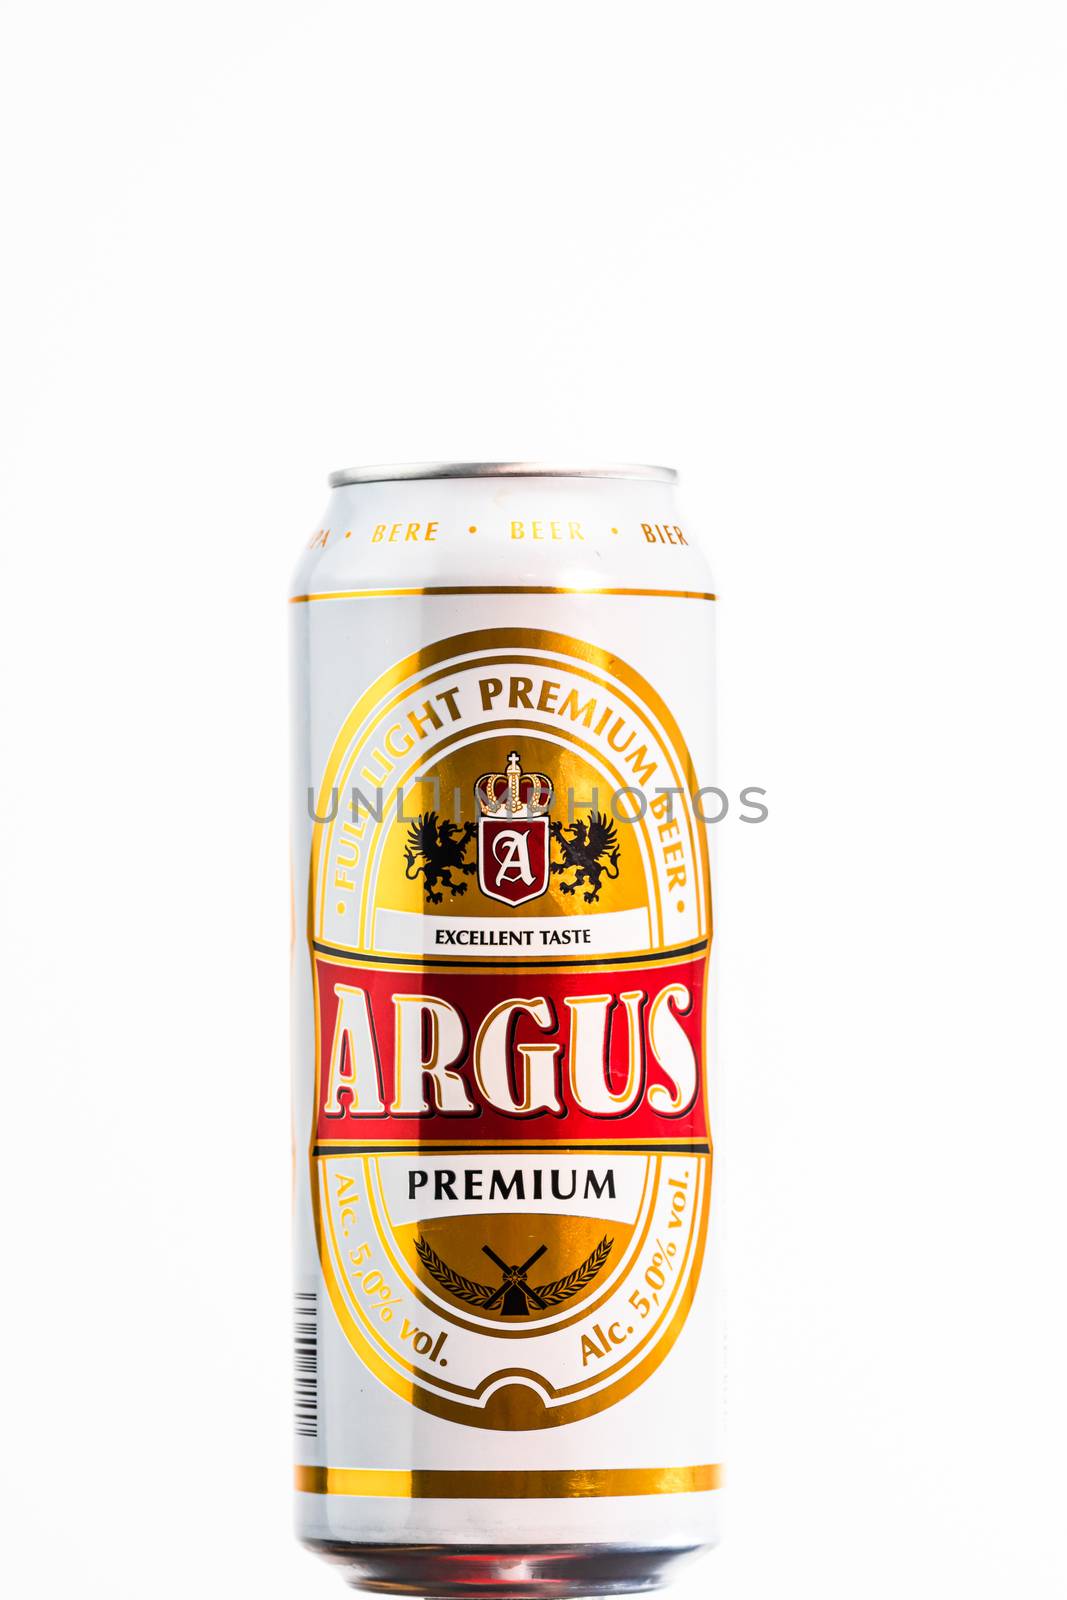 Argus Premium Lager beer. Lild supermarket own brand beer. Studio photo shoot in Bucharest, Romania, 2020